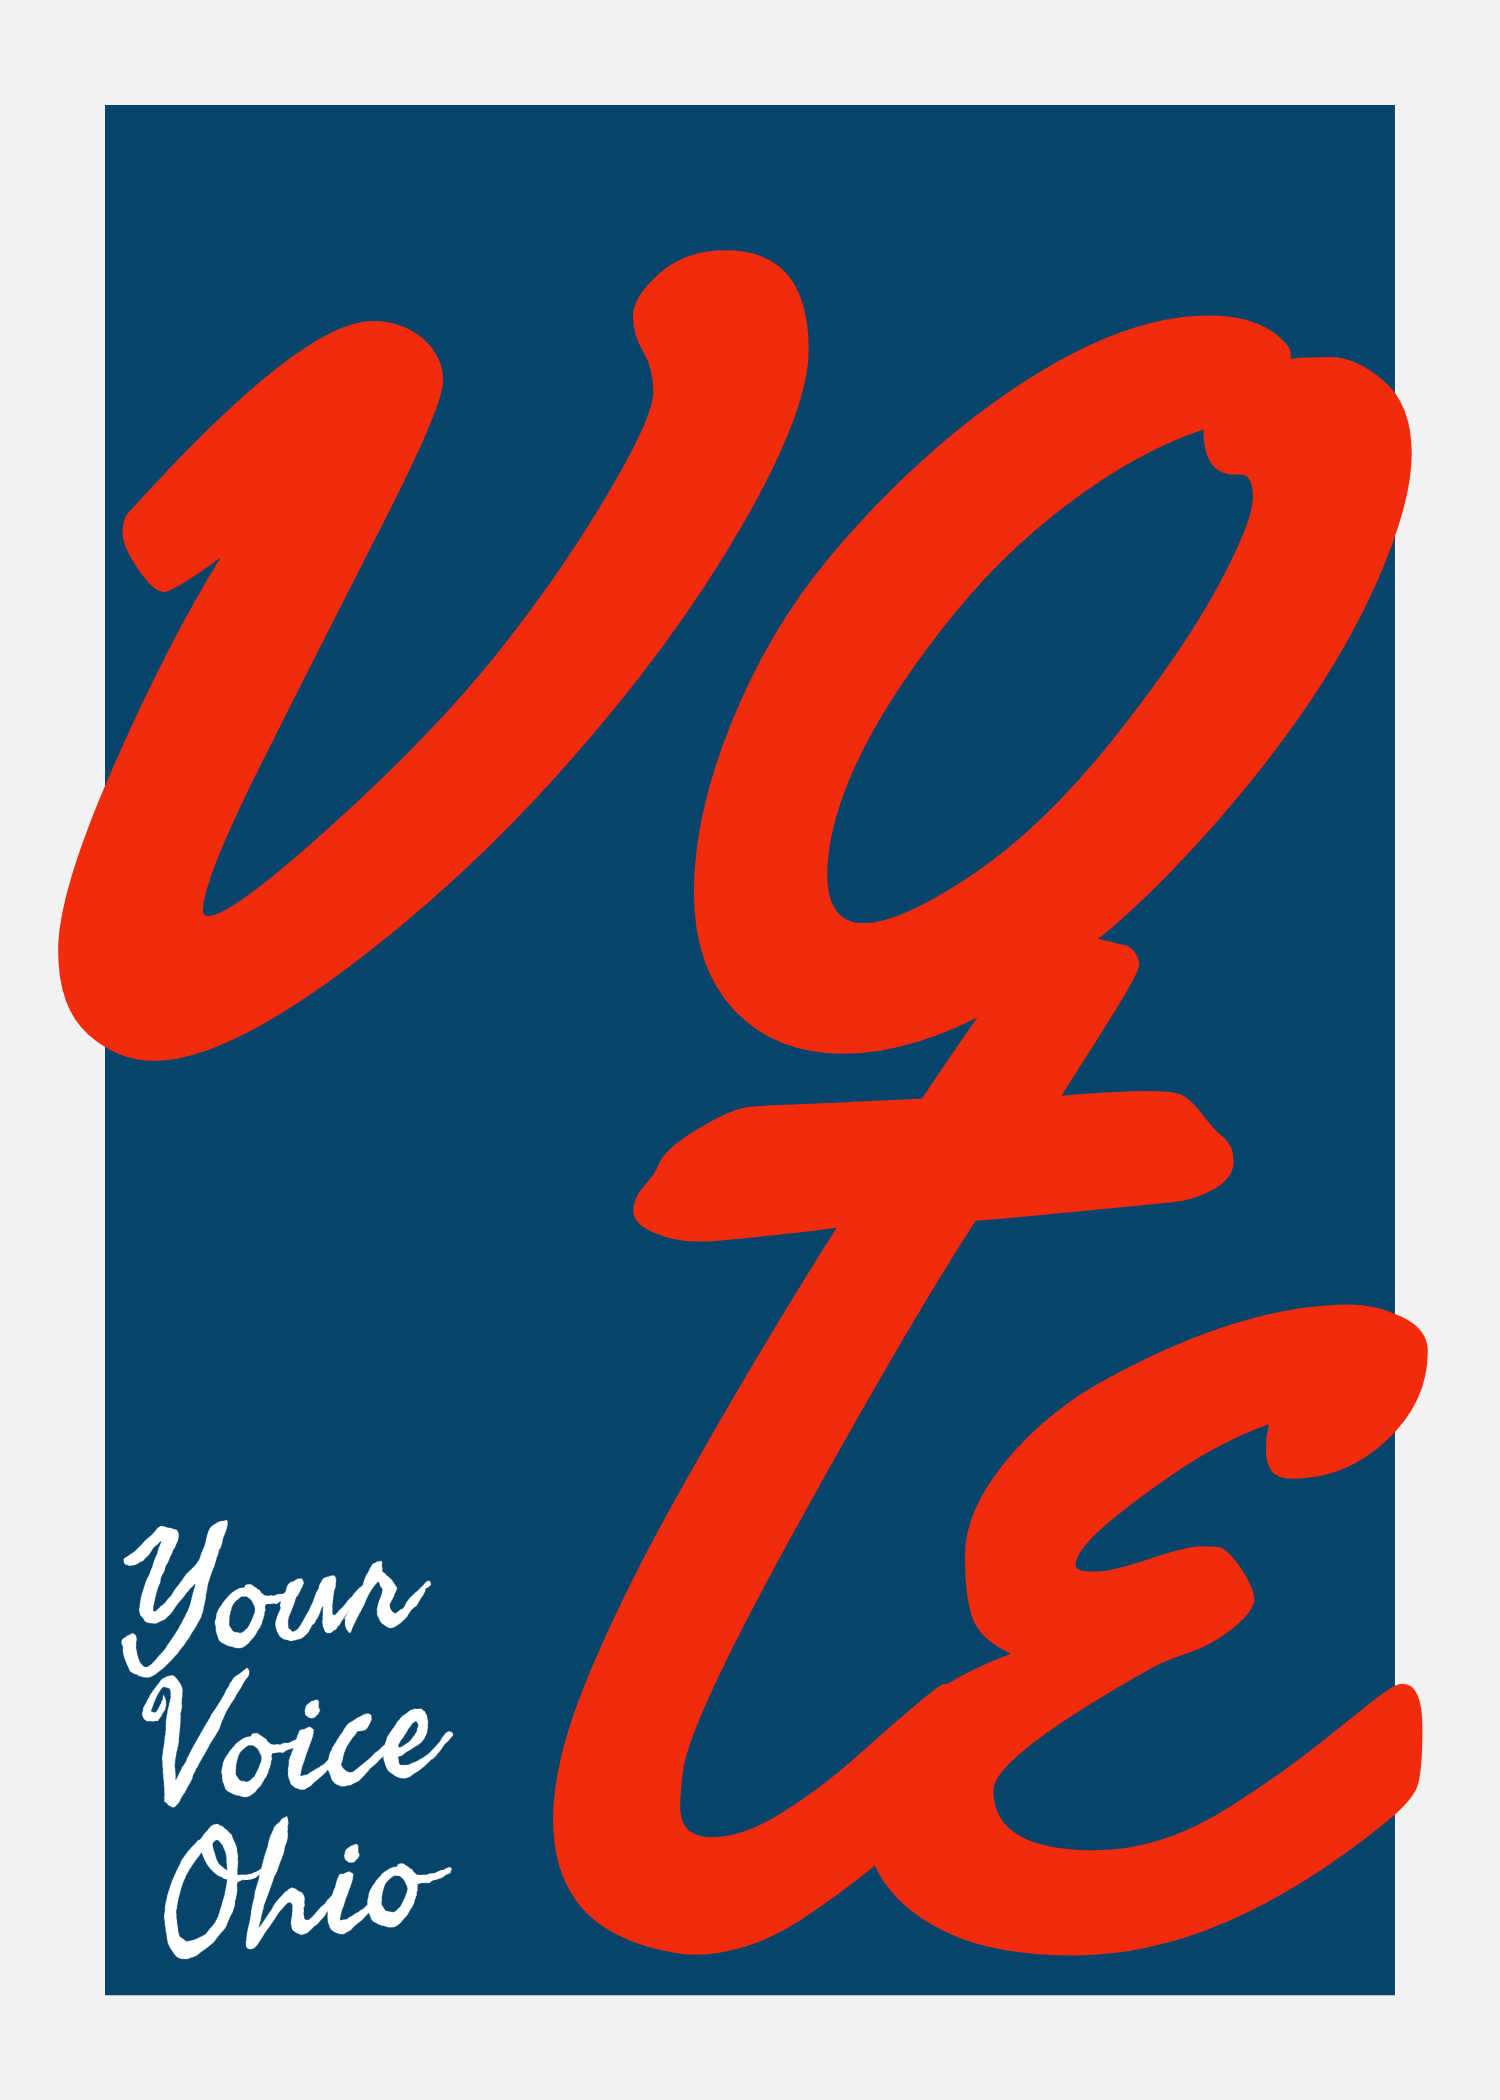 Ohio Voters Guide Your Voice Ohio